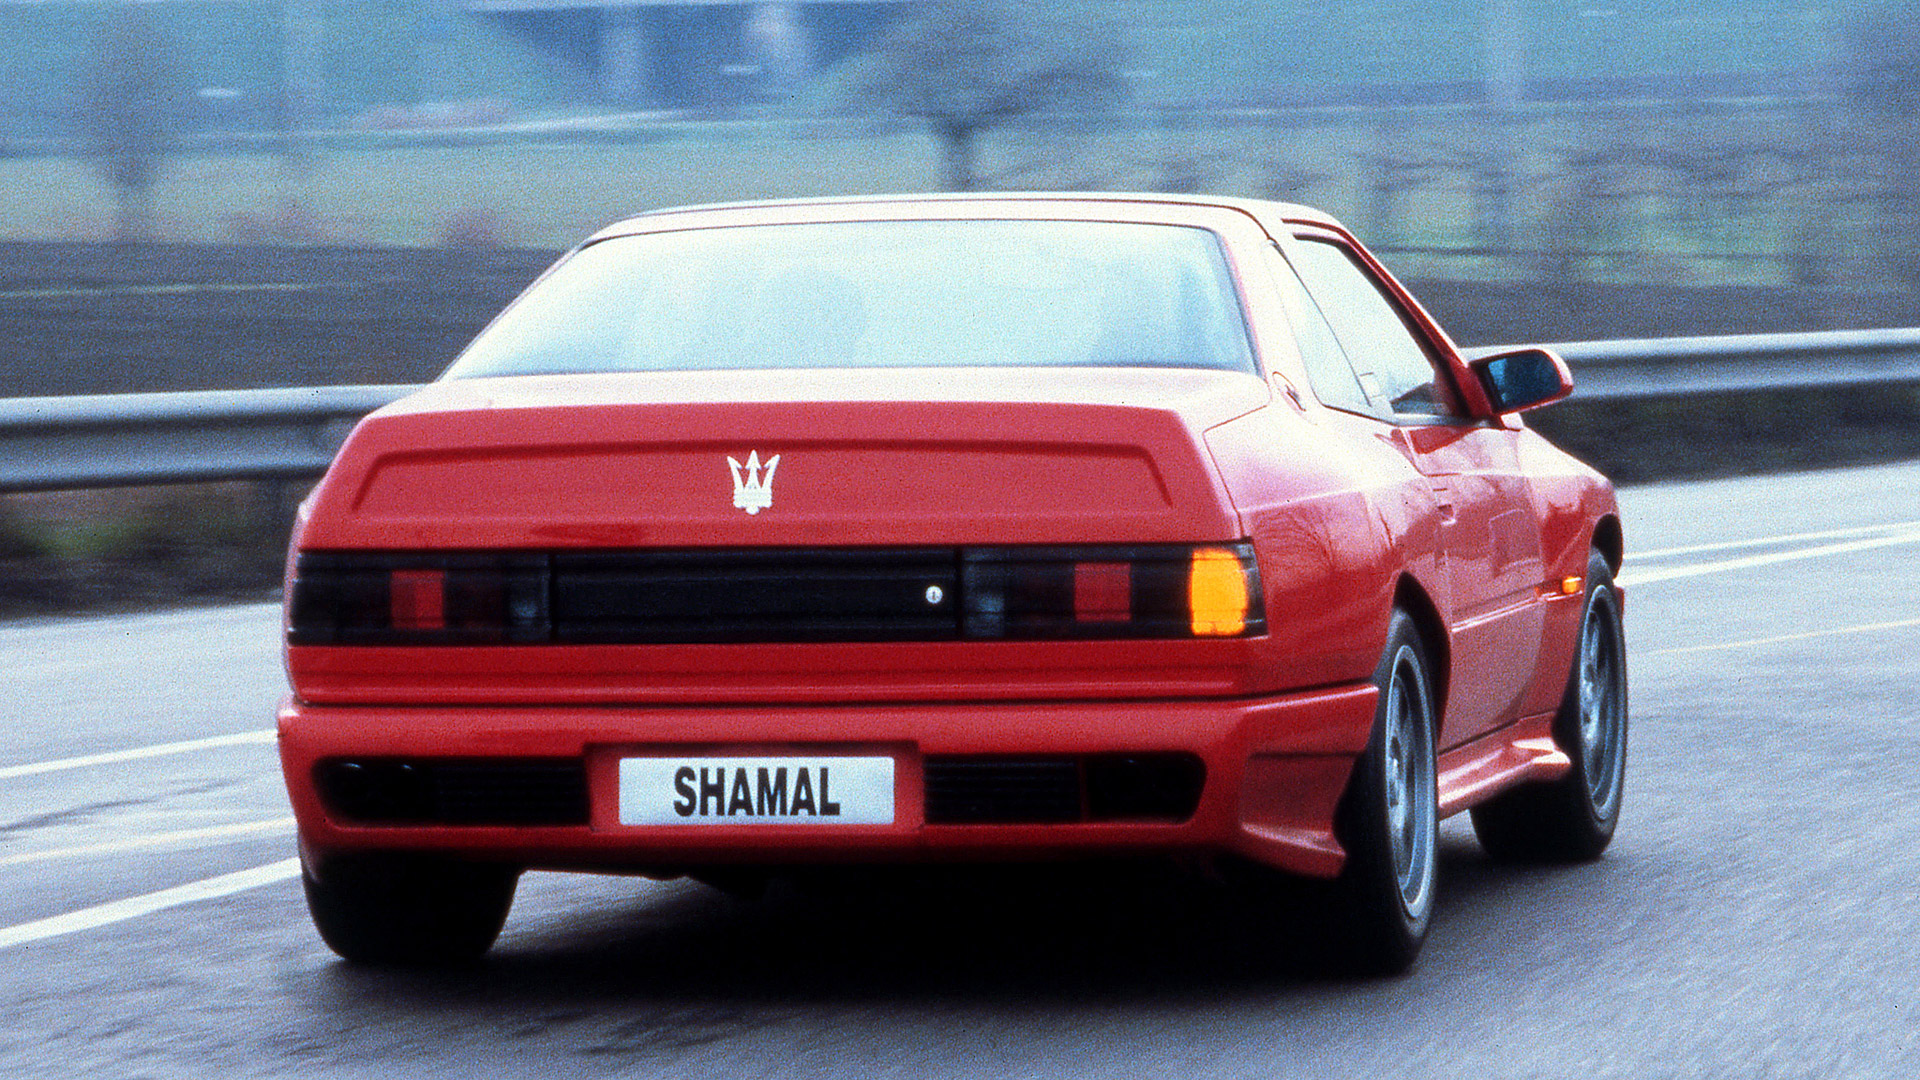  1990 Maserati Shamal Wallpaper.